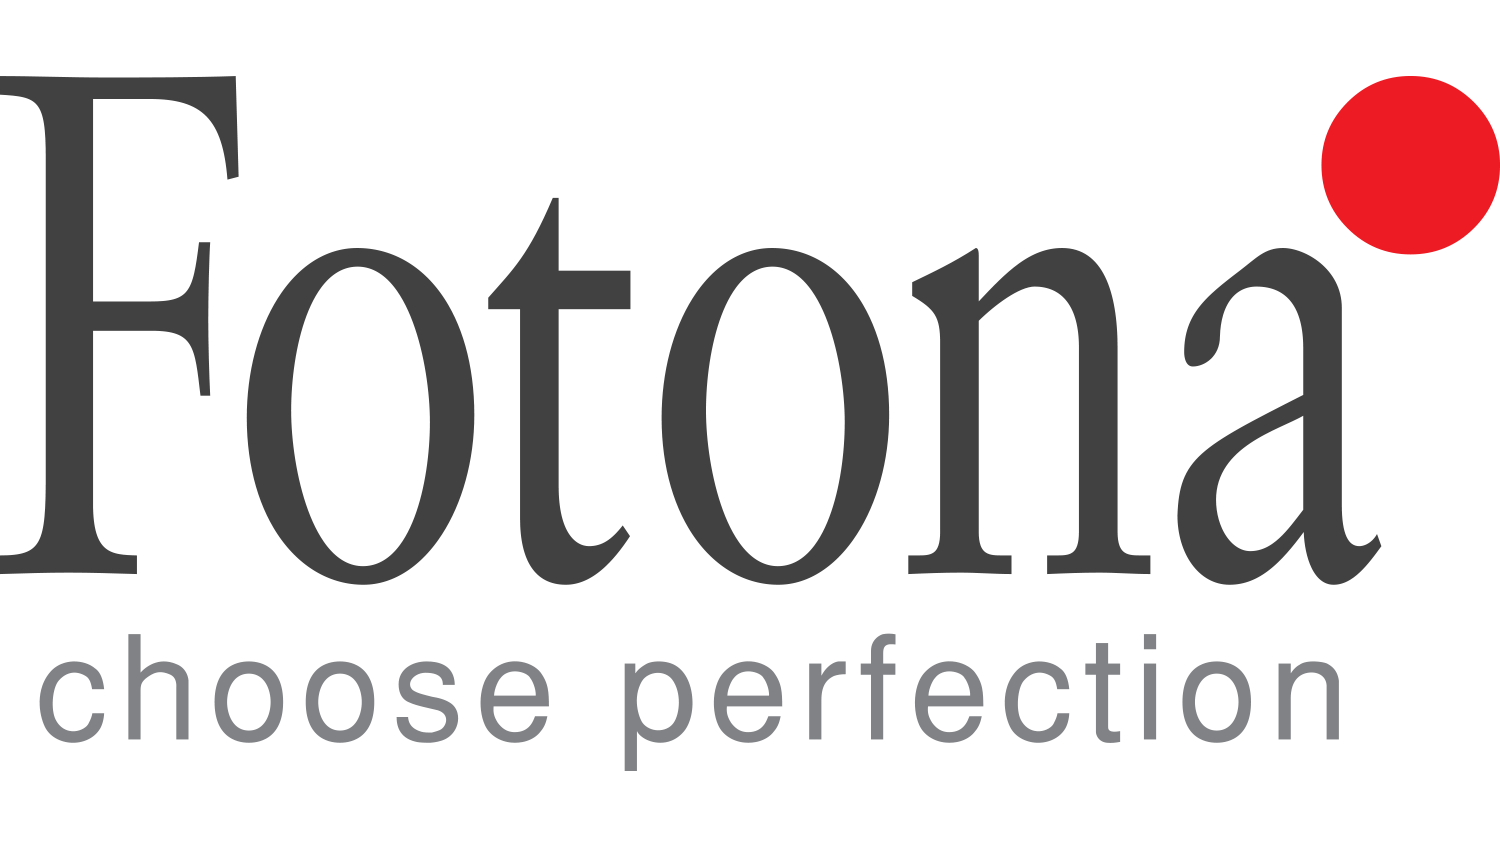 fotona logo